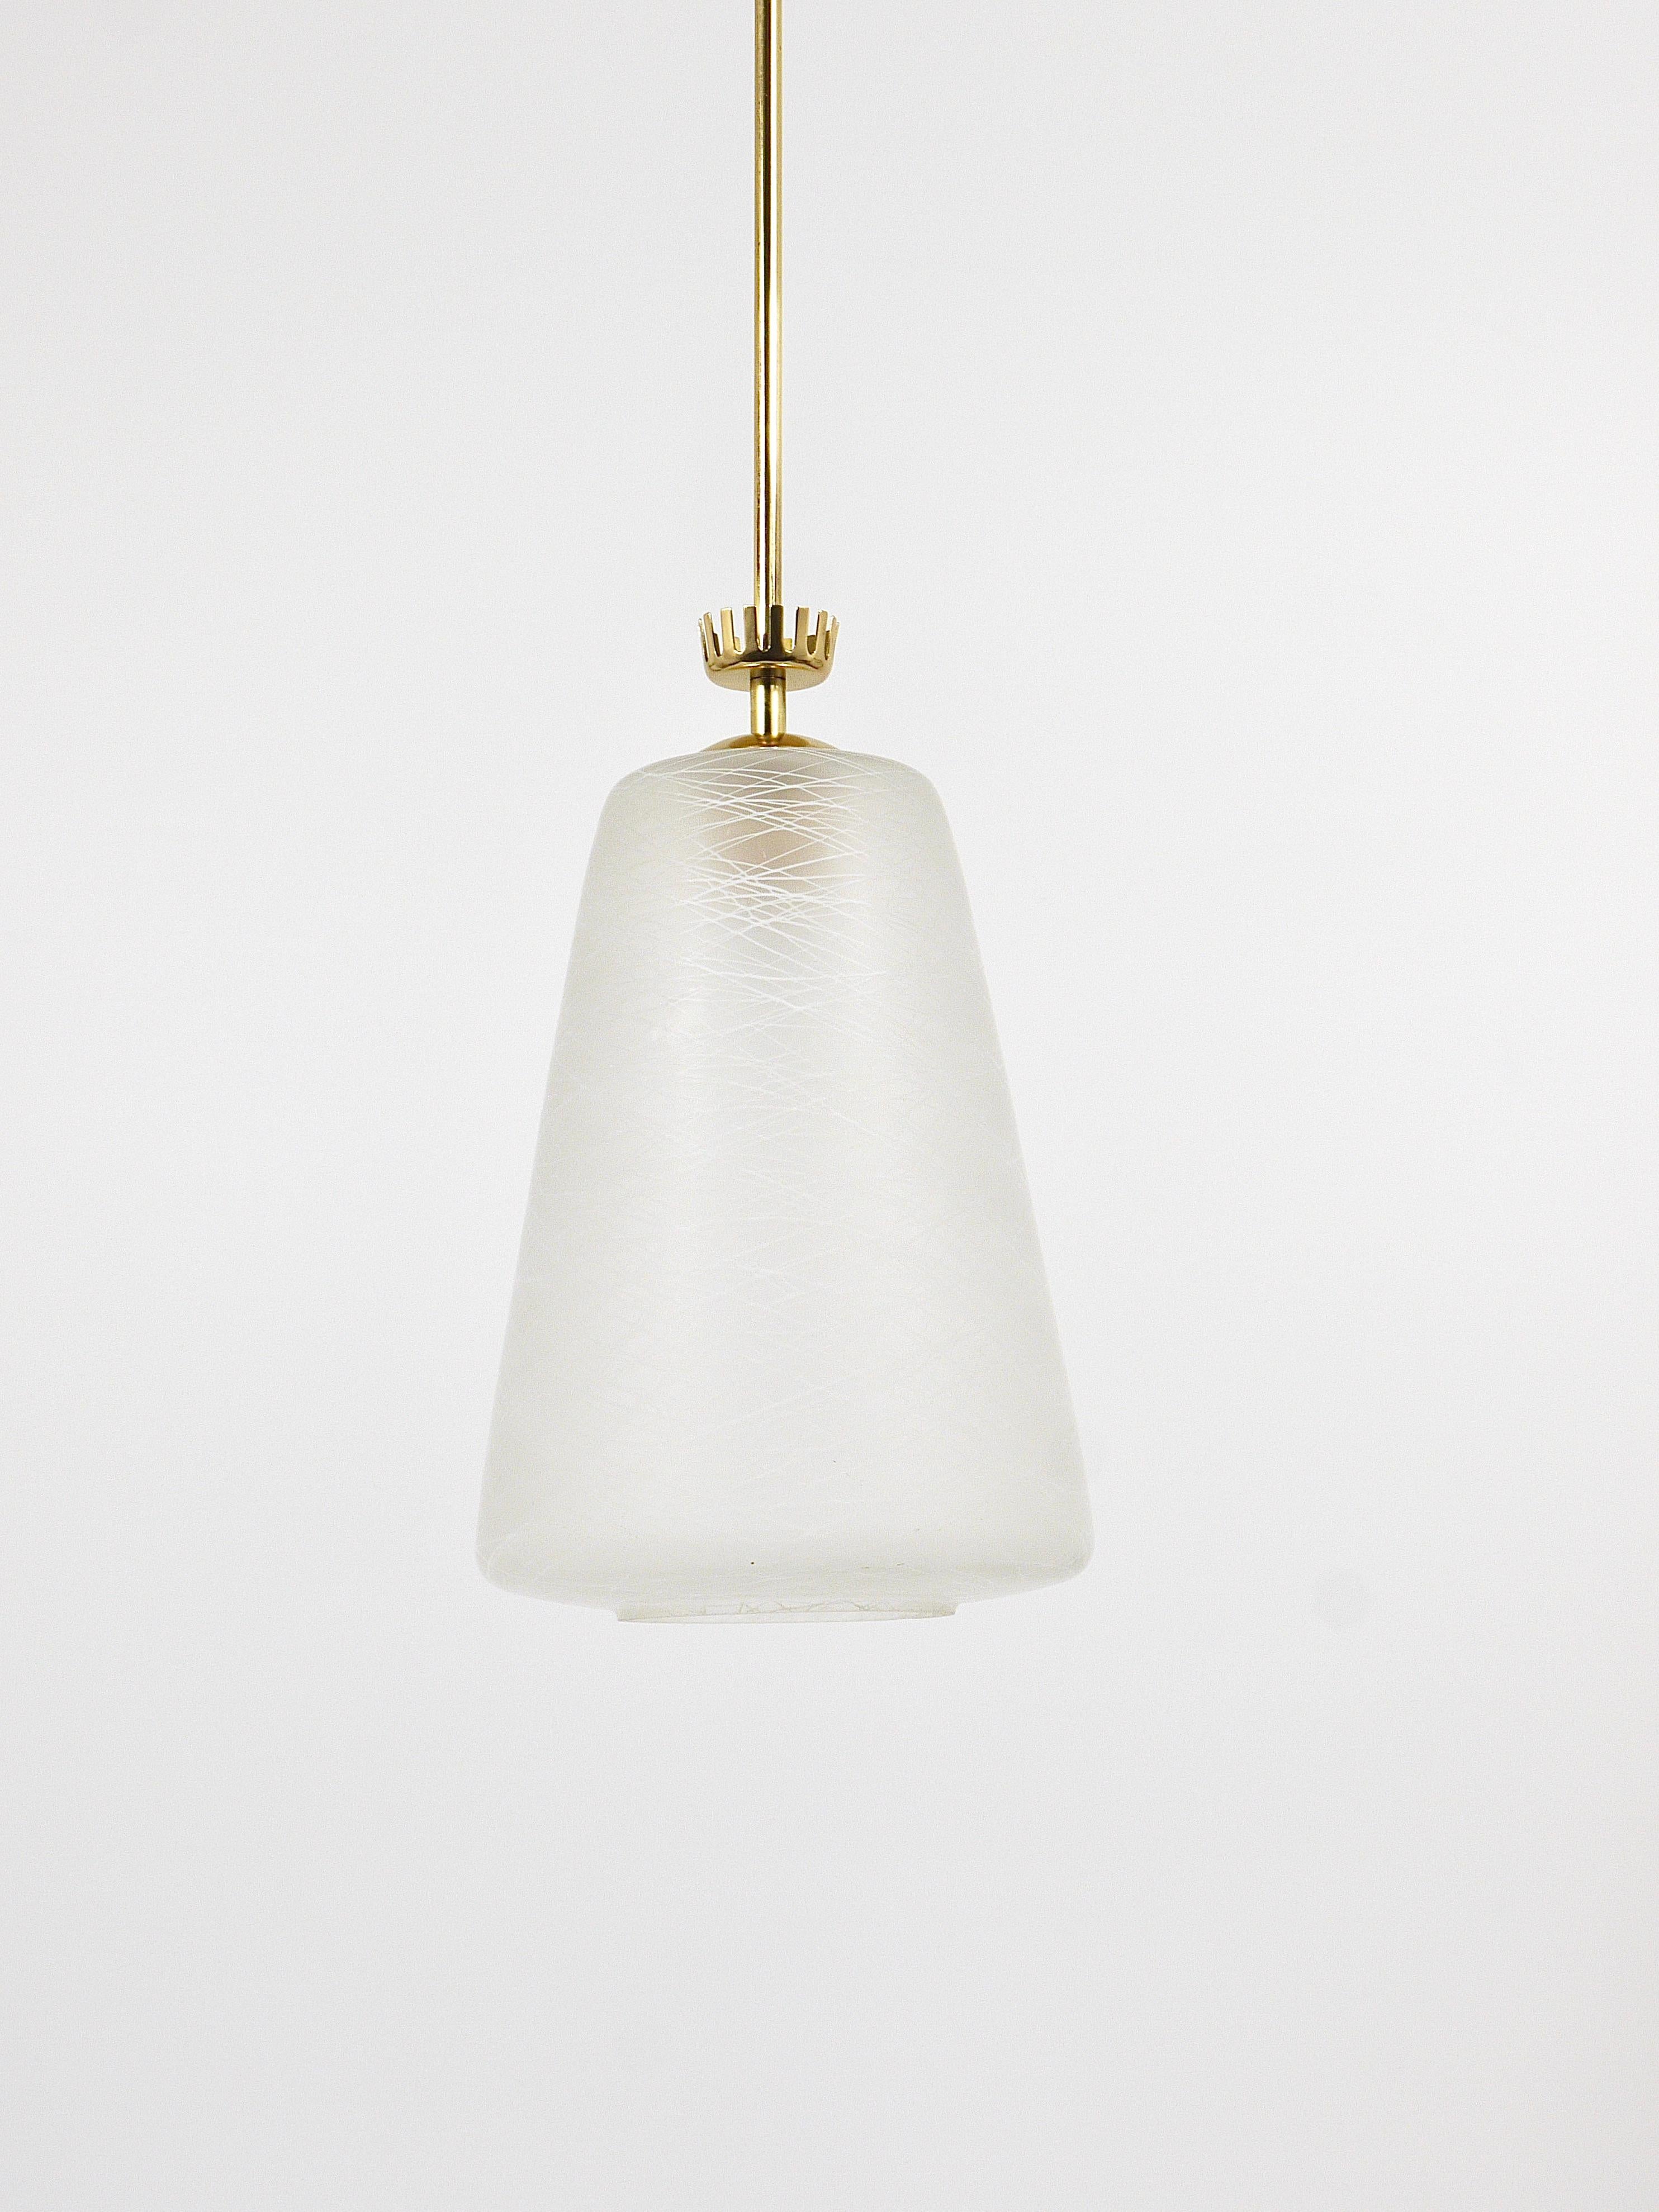 Gio Ponti Style Mid-Century Brass Crown Pendant Lamp Lantern, Italy, 1950s For Sale 6